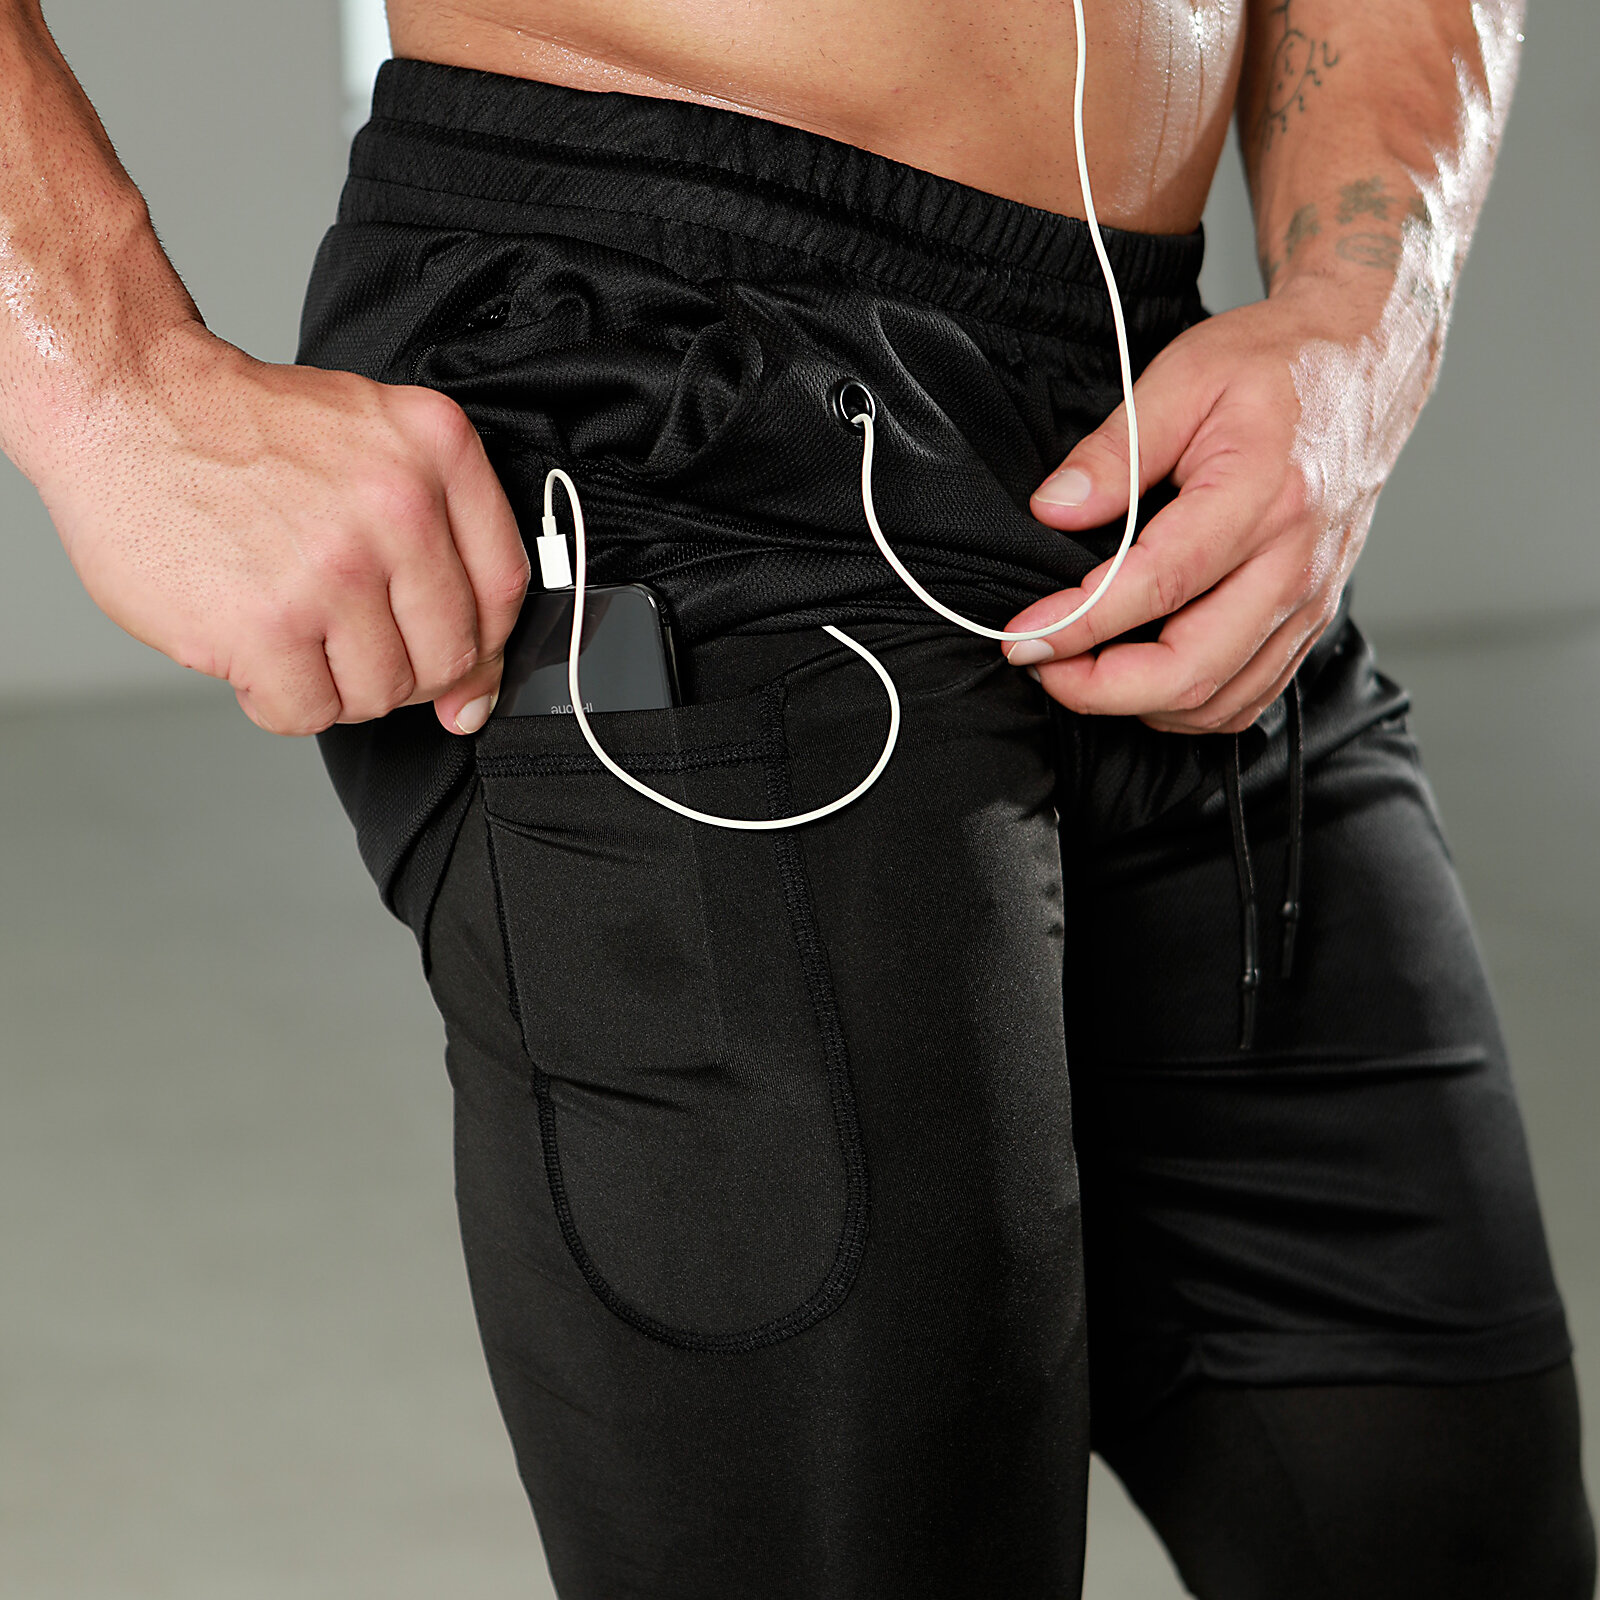 2 in 1 Men's black tight stretch legging and gym shorts - towel loop,Drawstring closure,Elastic Waist band, Headphone Jack,zipper pocket.